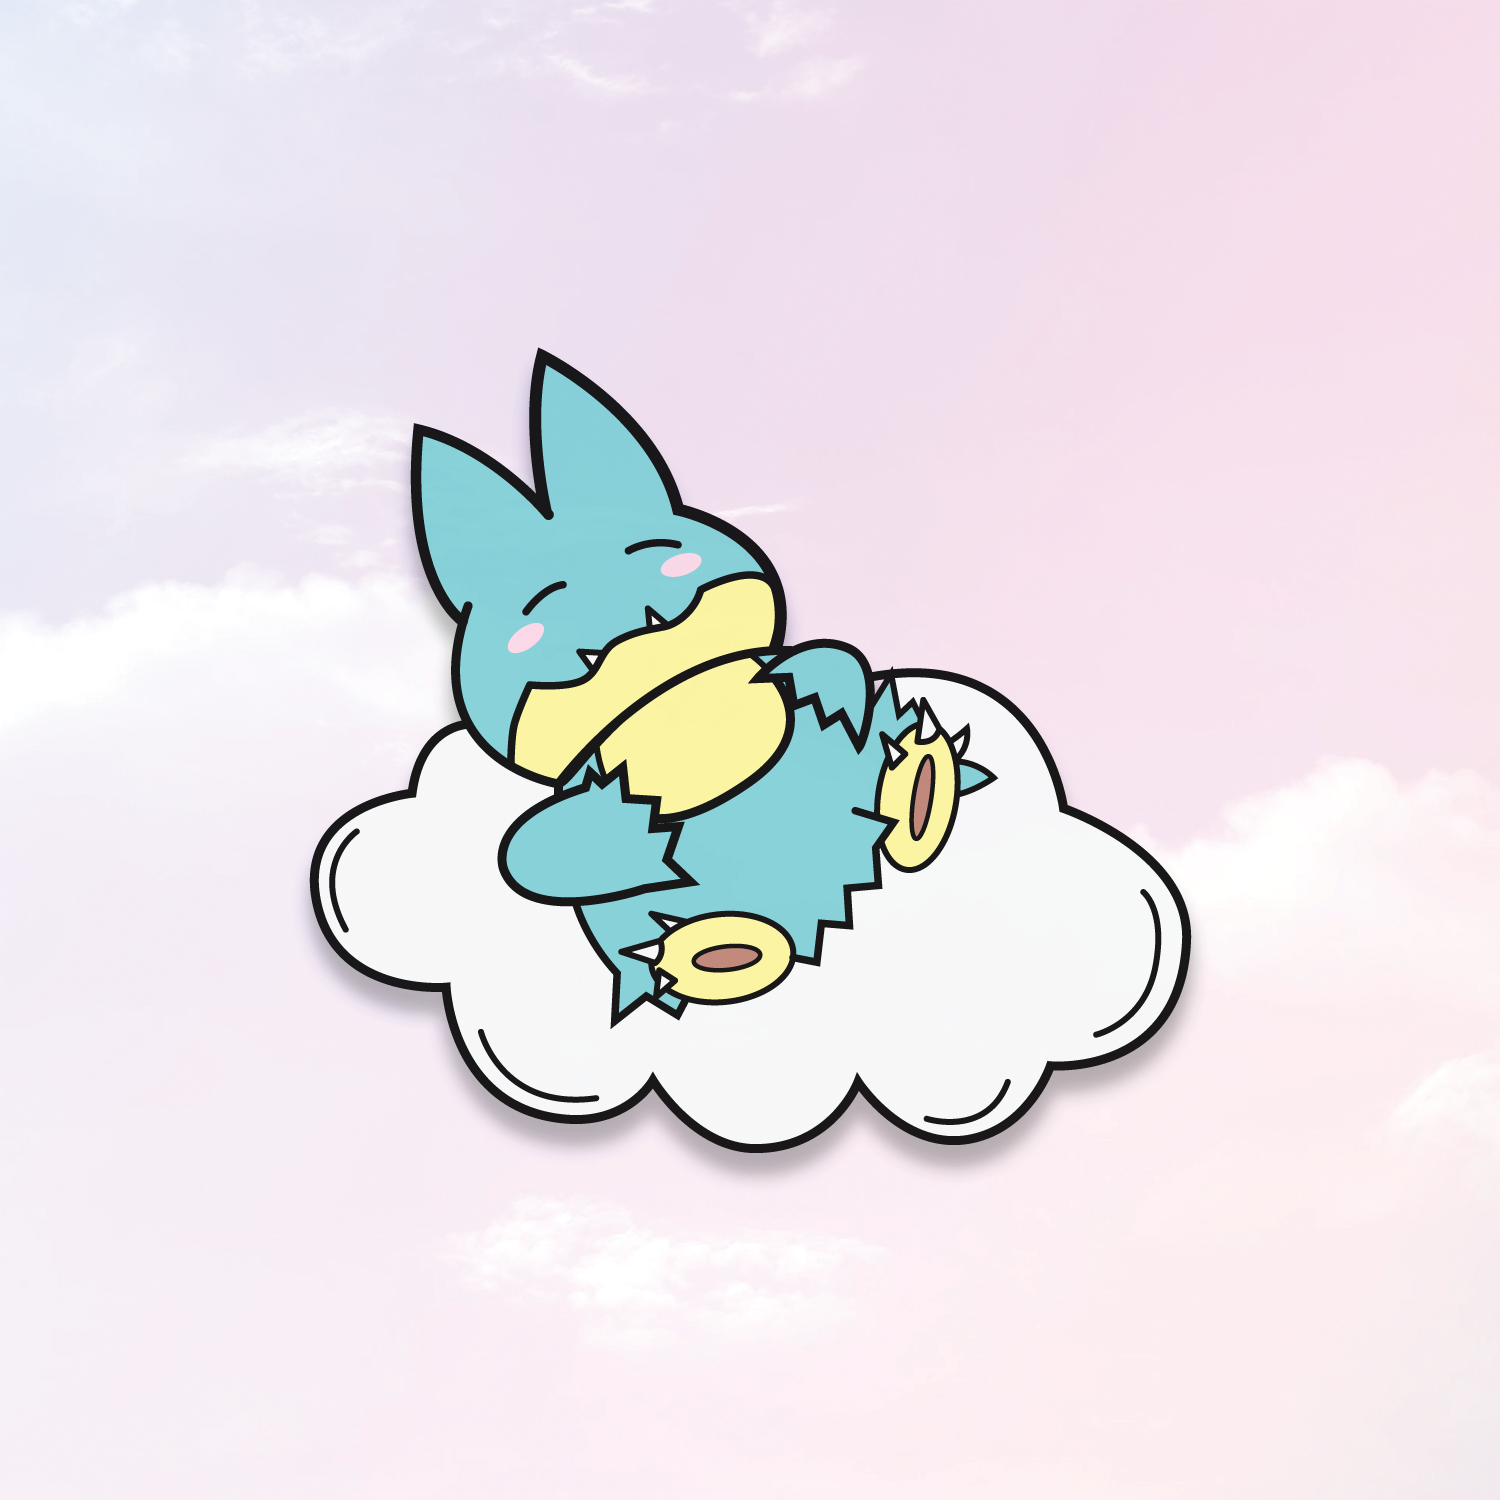 Munchlax Vinyl Sticker design features the Pokemon Snorlax lazily sleeping on a cloud.